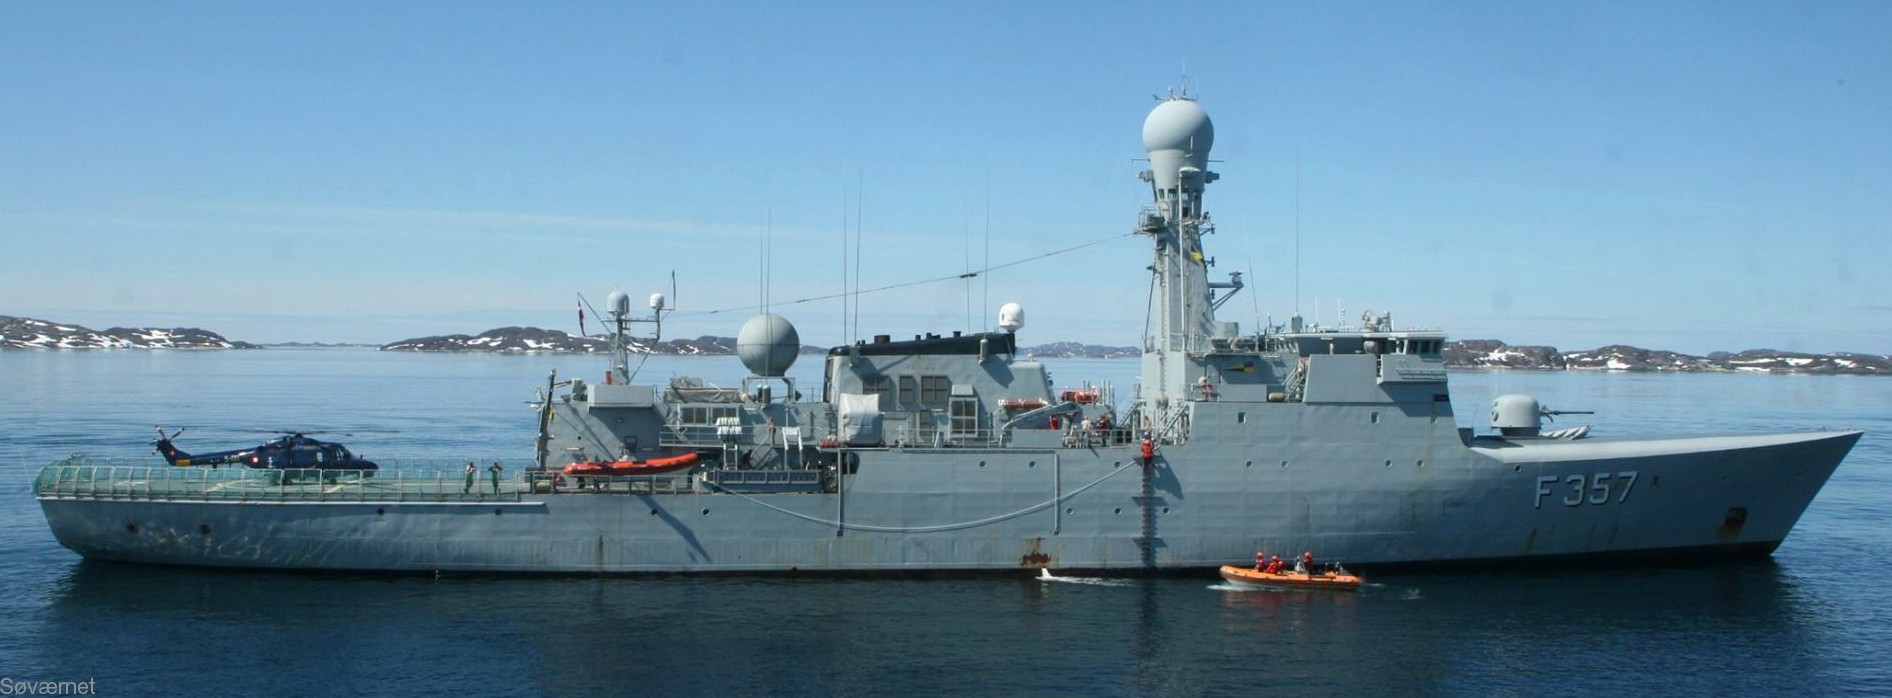 f-357 hdms thetis ocean patrol frigate royal danish navy kongelige danske marine inspektionsskibet 46